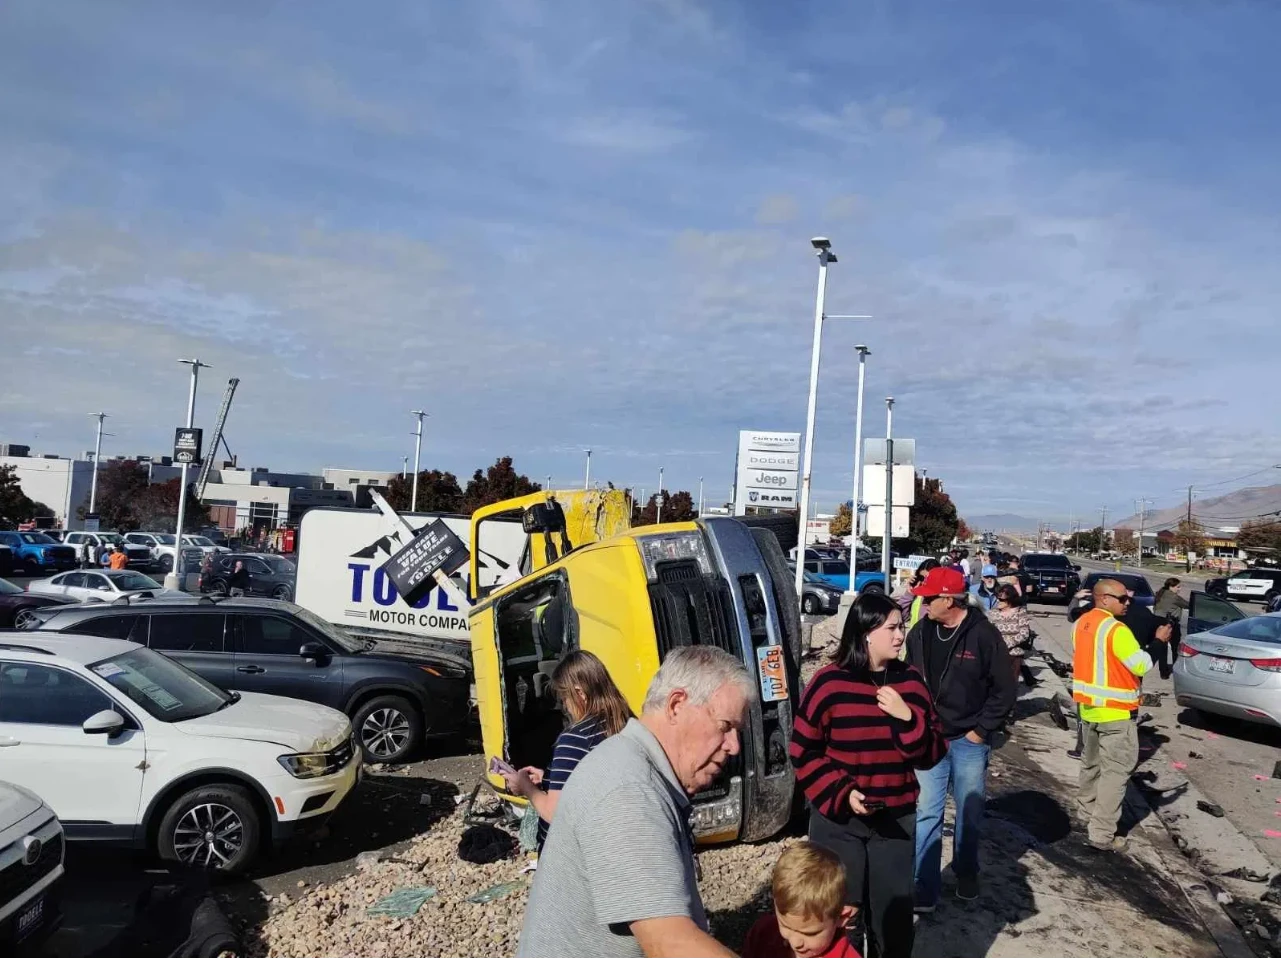 27 Vehicles Damaged in Fiery Semi-Truck Crash at Tooele Car Dealership